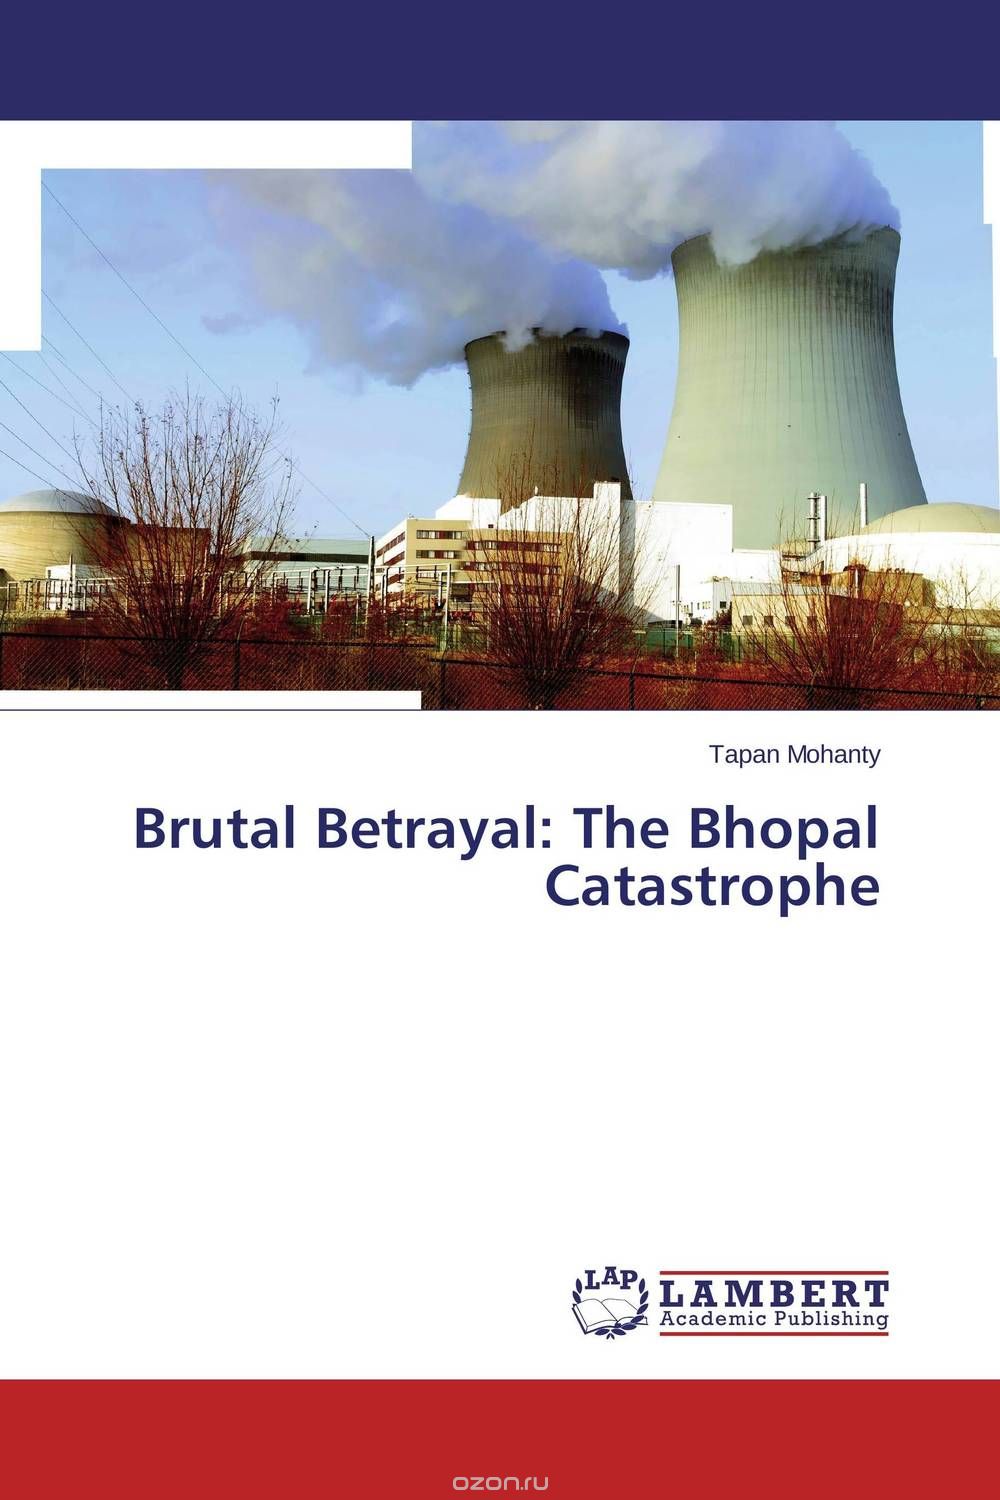 Скачать книгу "Brutal Betrayal: The Bhopal Catastrophe"